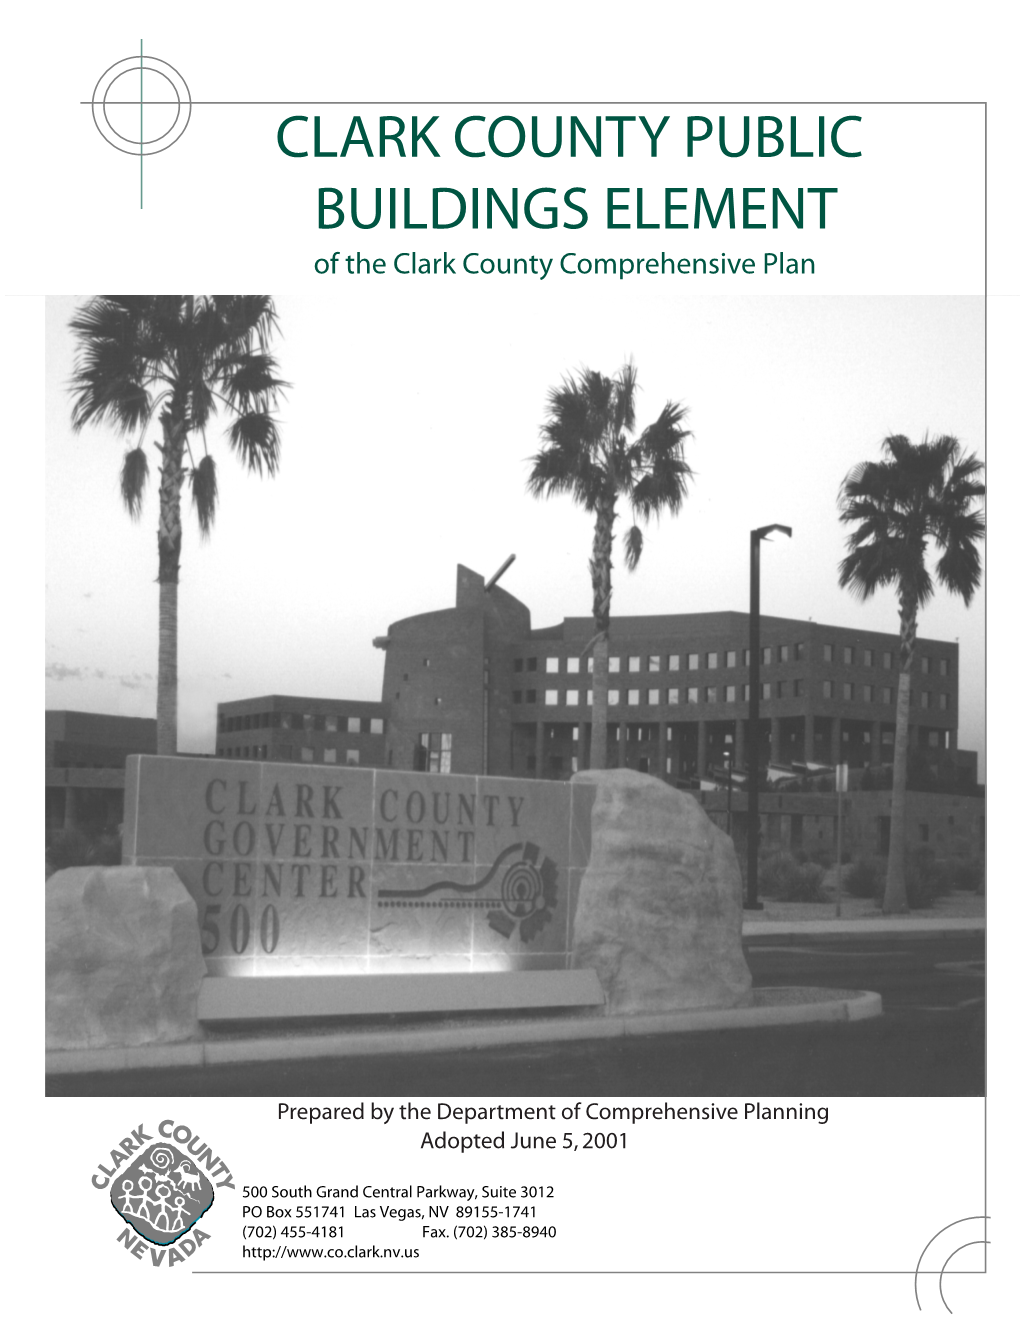 CLARK COUNTY PUBLIC BUILDINGS ELEMENT of the Clark County Comprehensive Plan